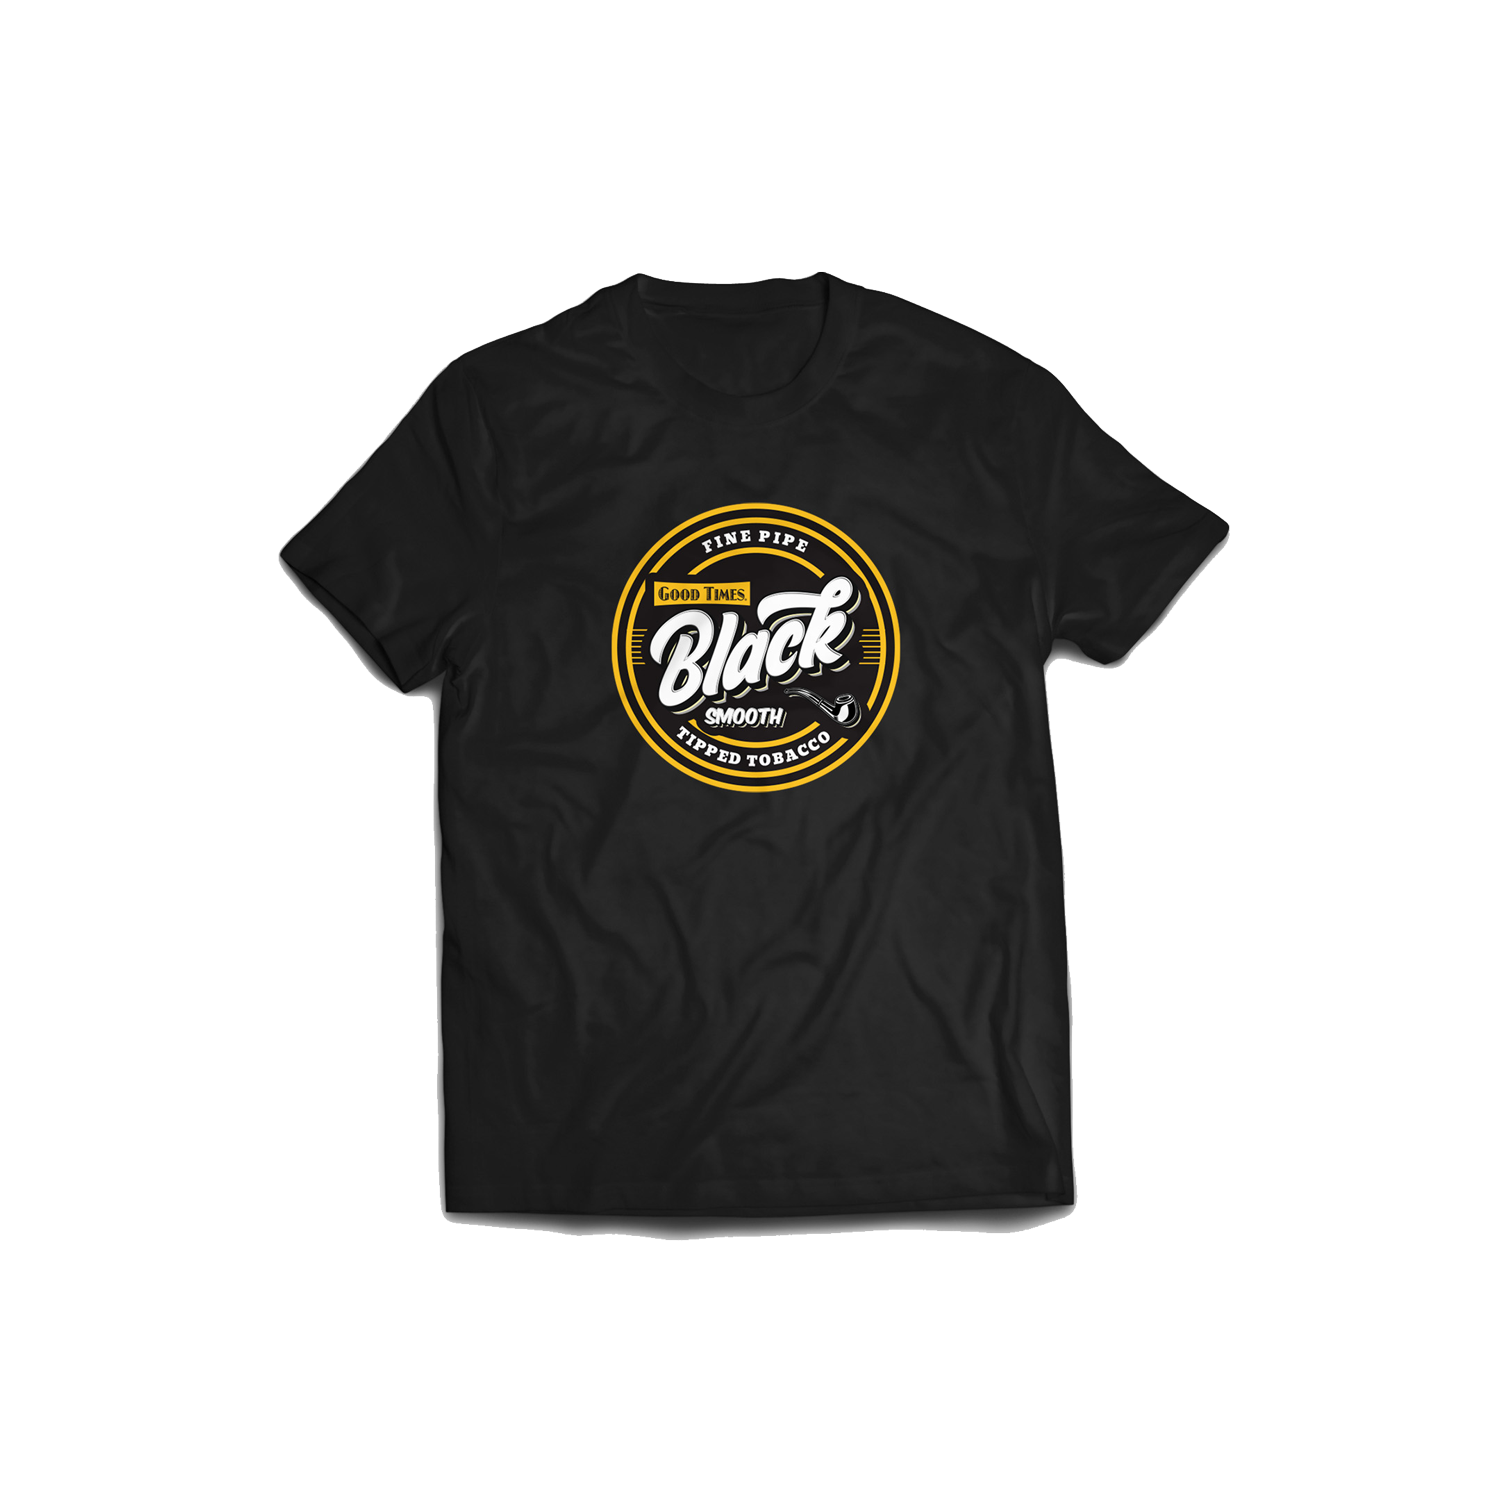 Black Smooth T-shirt – Good Times Rewards